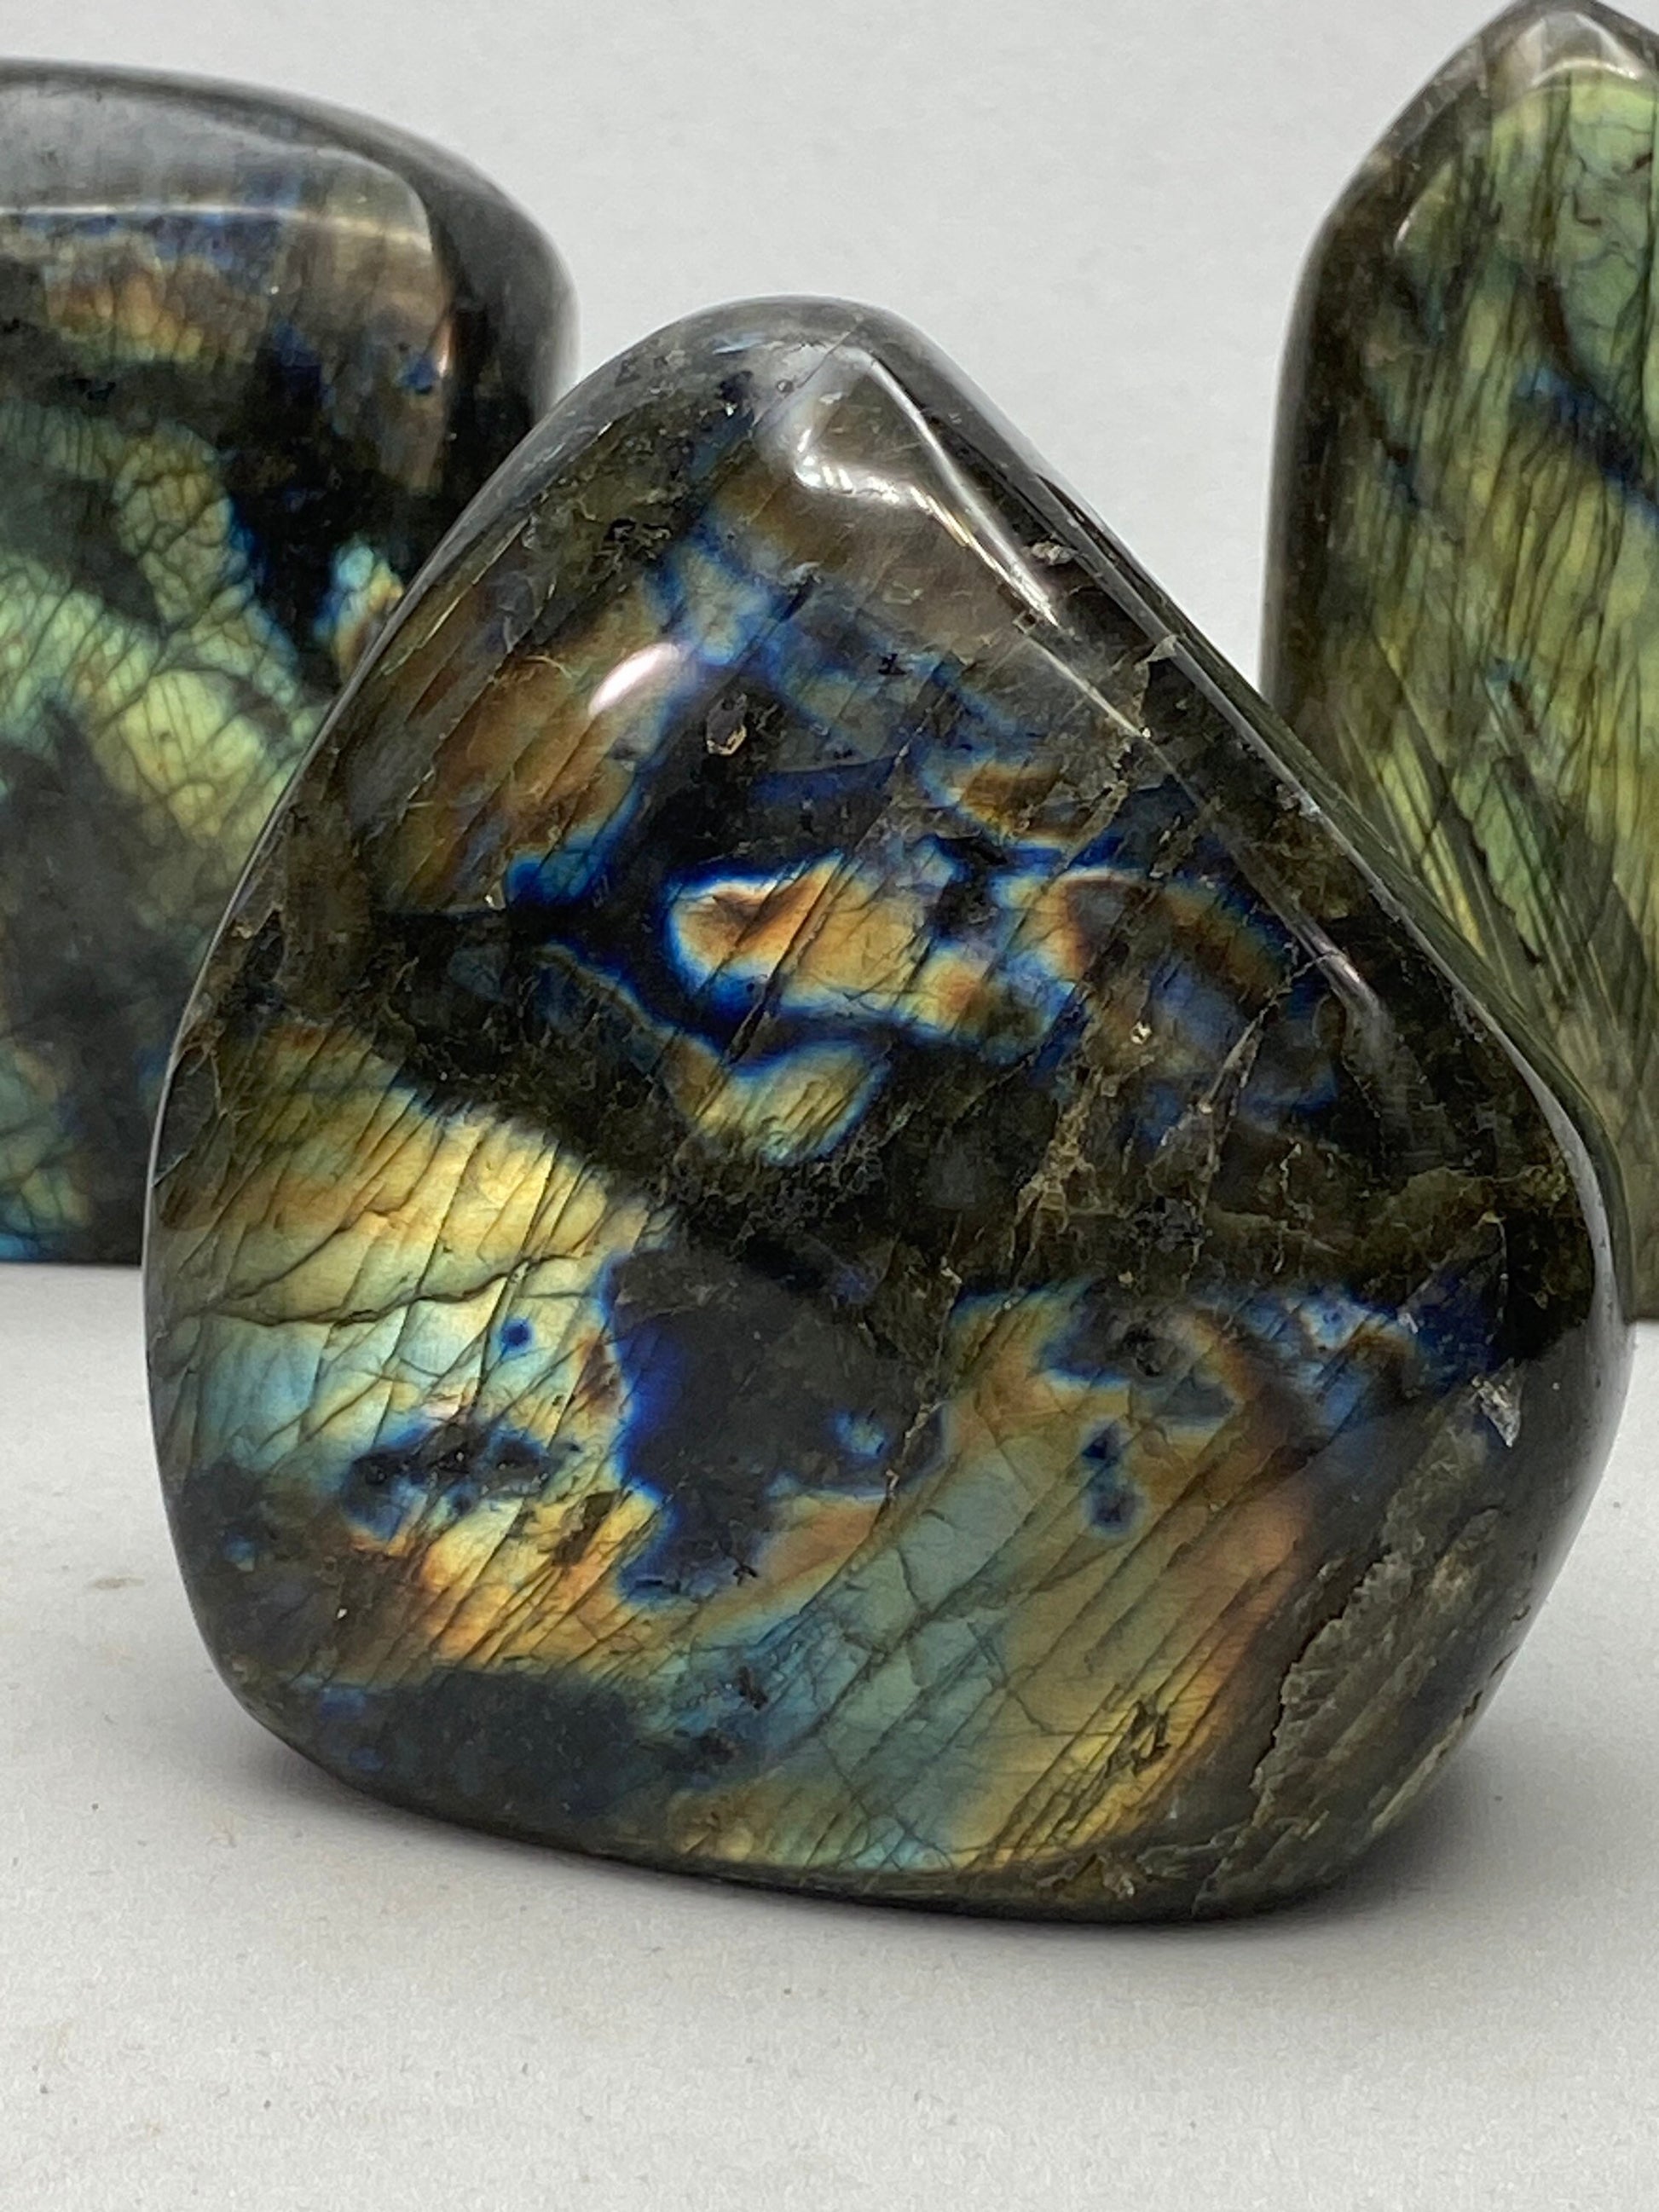 Labradorite crystal